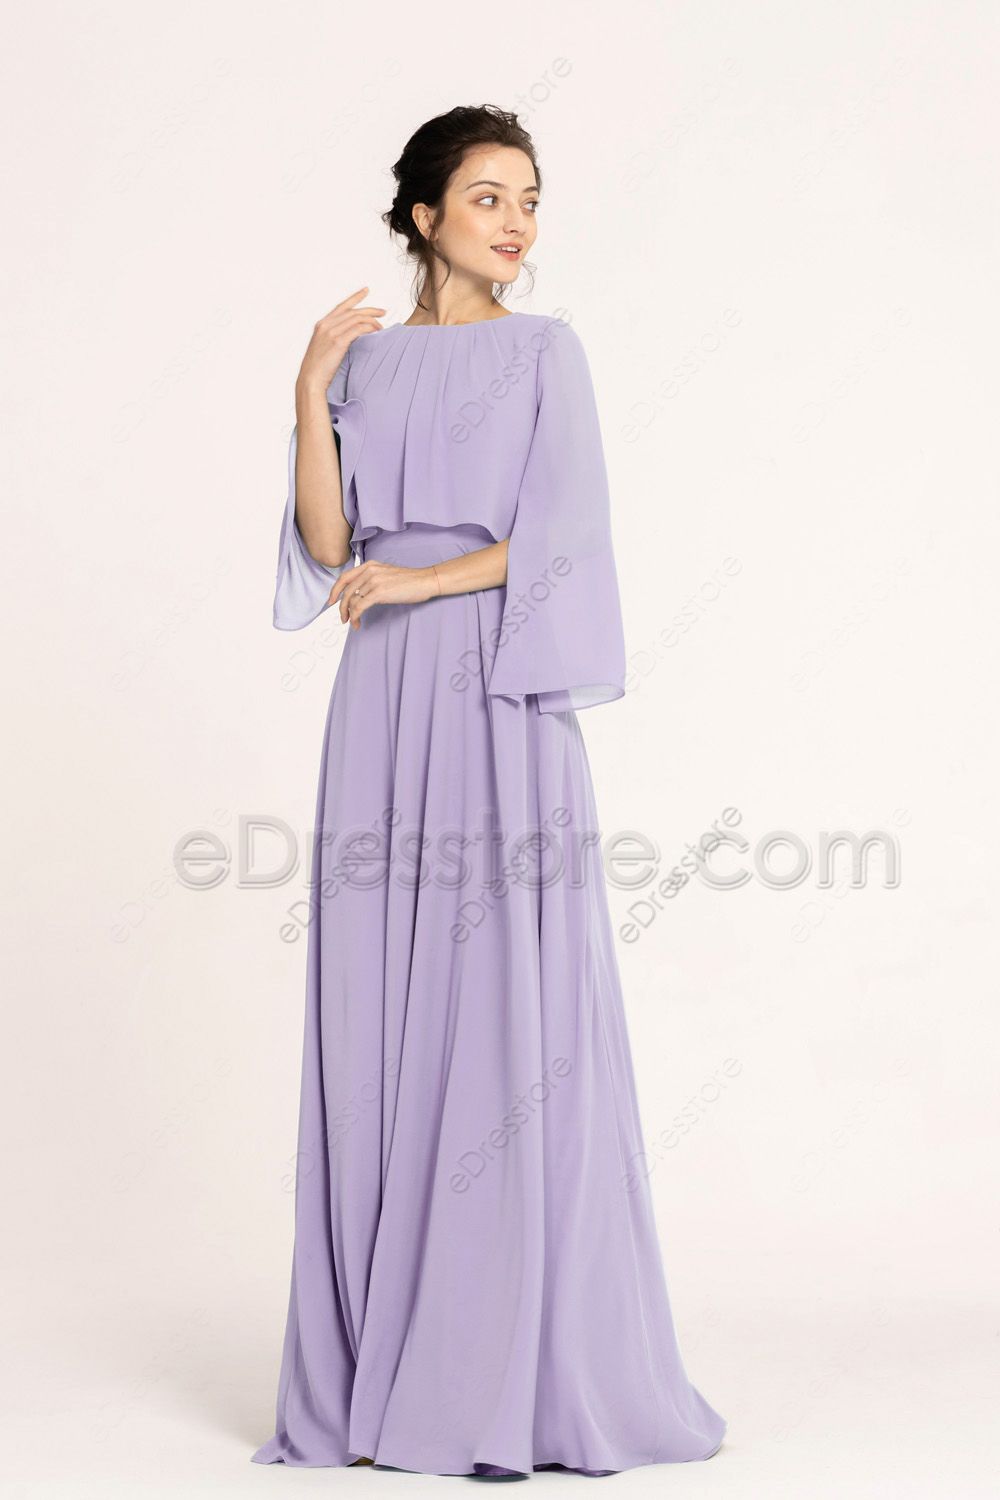 Modest Popover Lavender Bridesmaid Dresses with Sleeves | eDresstore